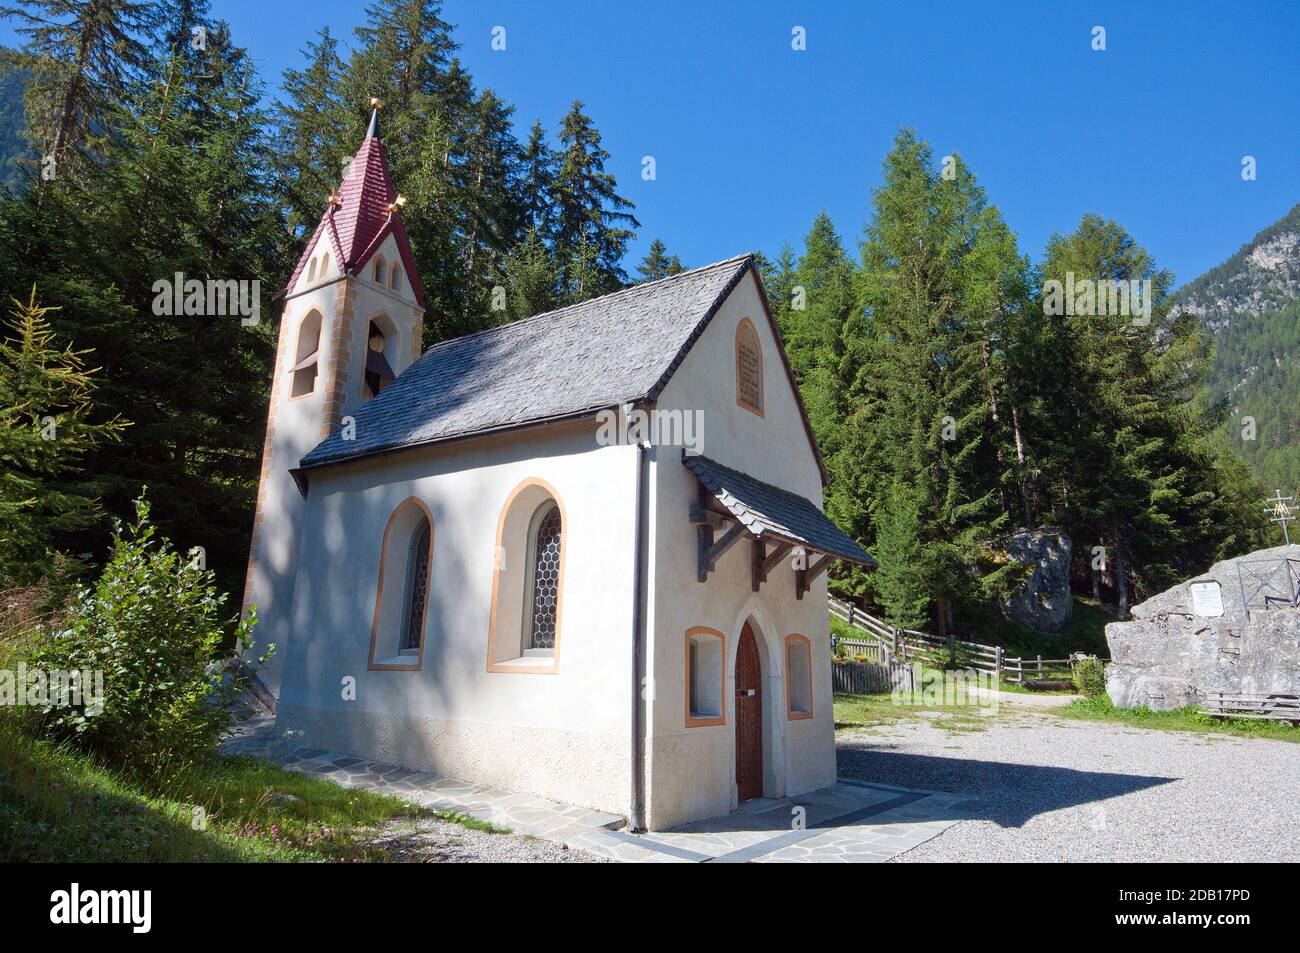 Santa Maria alla Fonderia chapel (Kapelle St. Maria in der Schmelz), Martell Valley (Martelltal), Bolzano, Trentino-Alto Adige, Italy Stock Photo